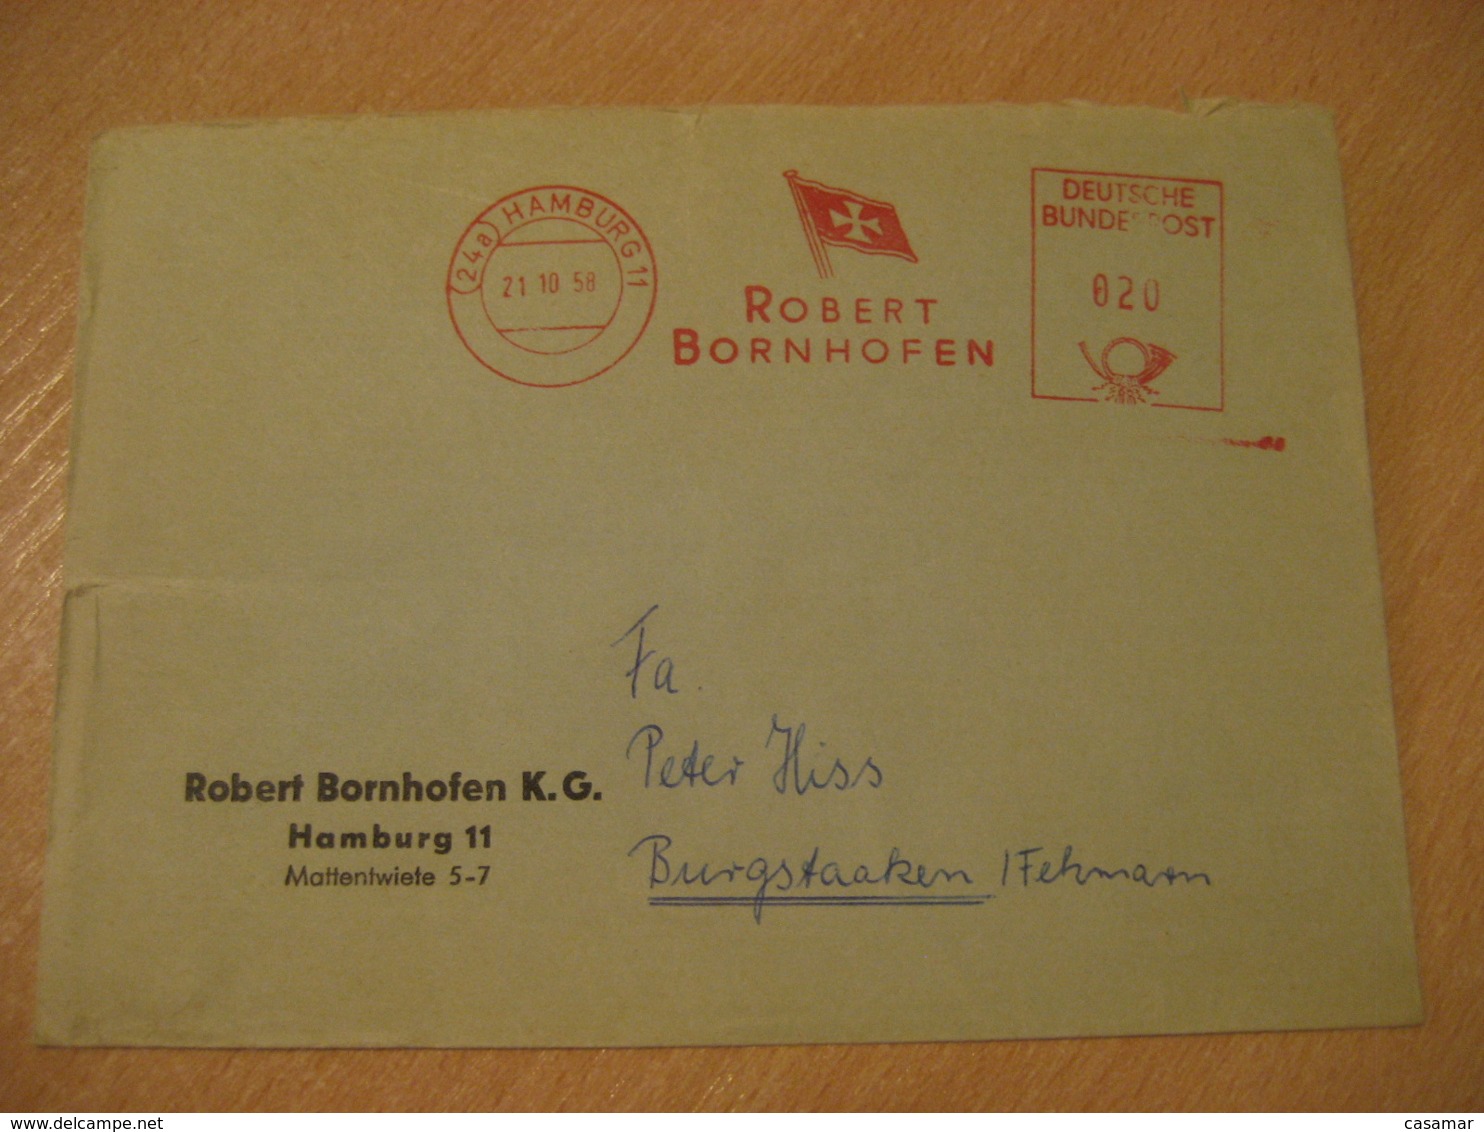 HAMBURG 1958 Robert Bornhofen Flag Flags Meter Mail Cancel Cover GERMANY - Covers